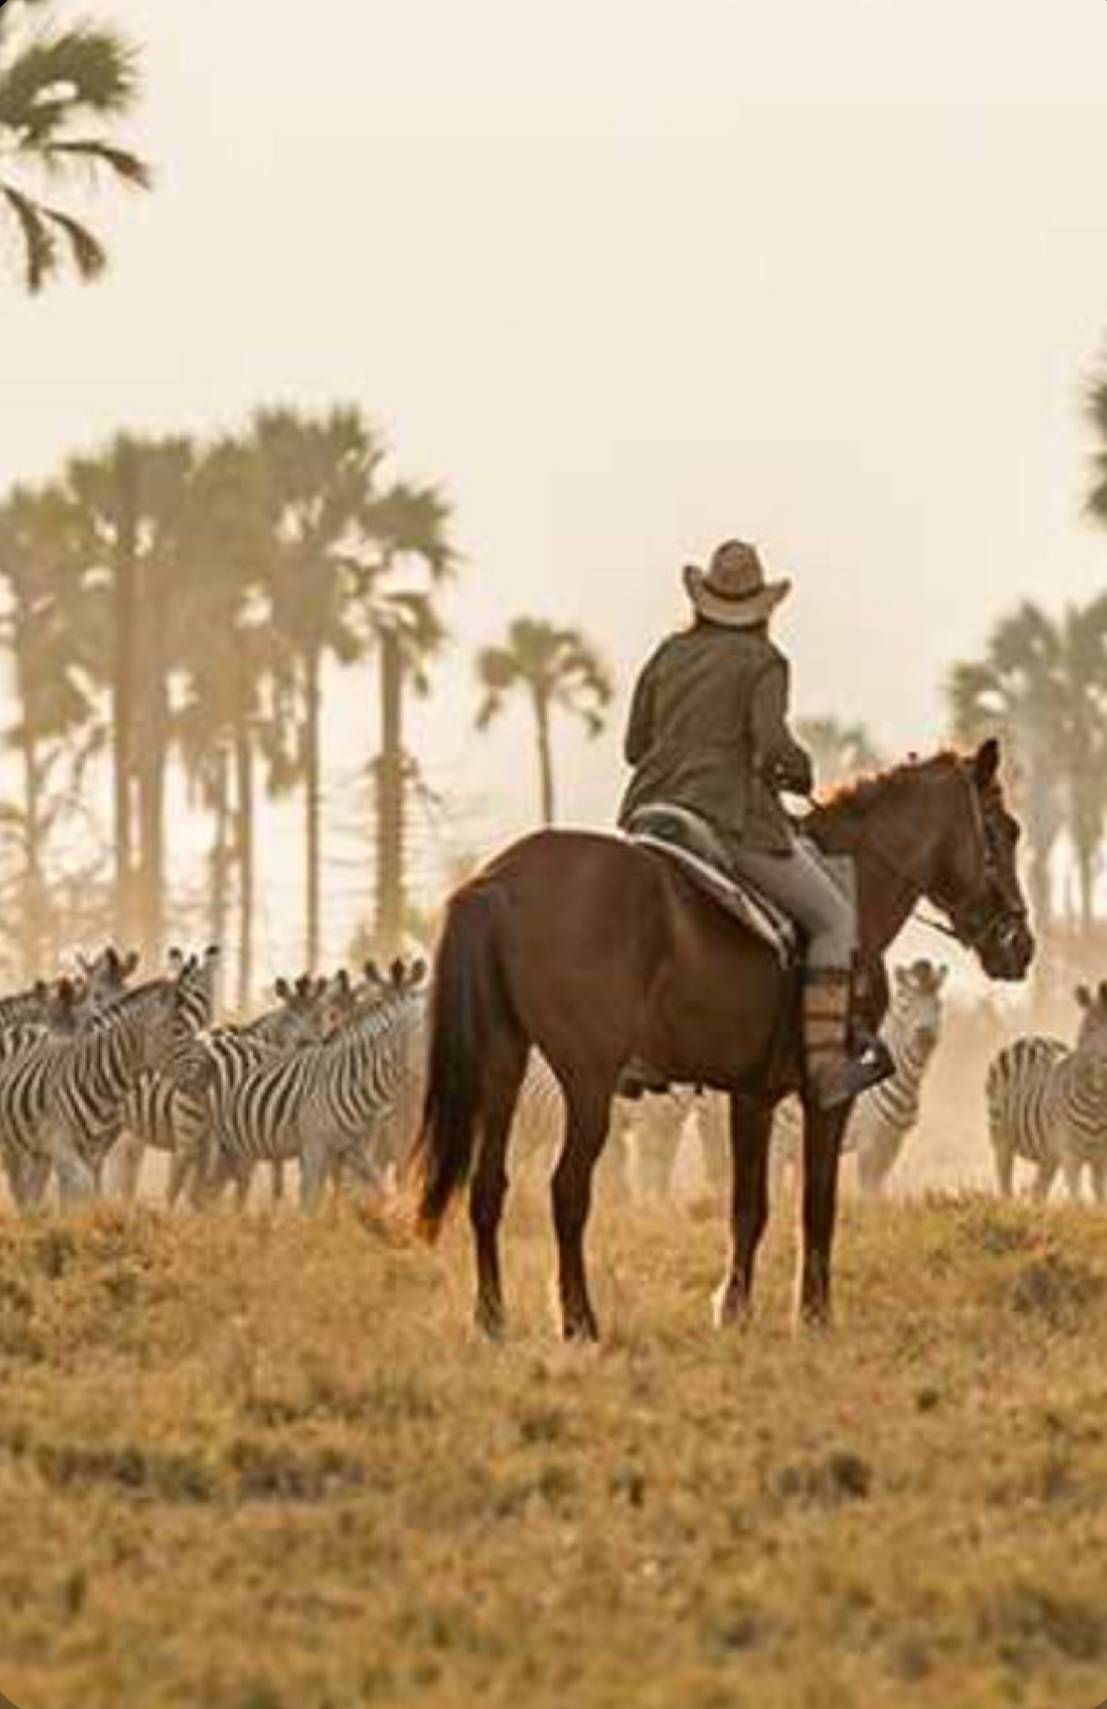 YOU’RE INVITED: HORSEBACK SAFARI TRIP TO ZAMBIA